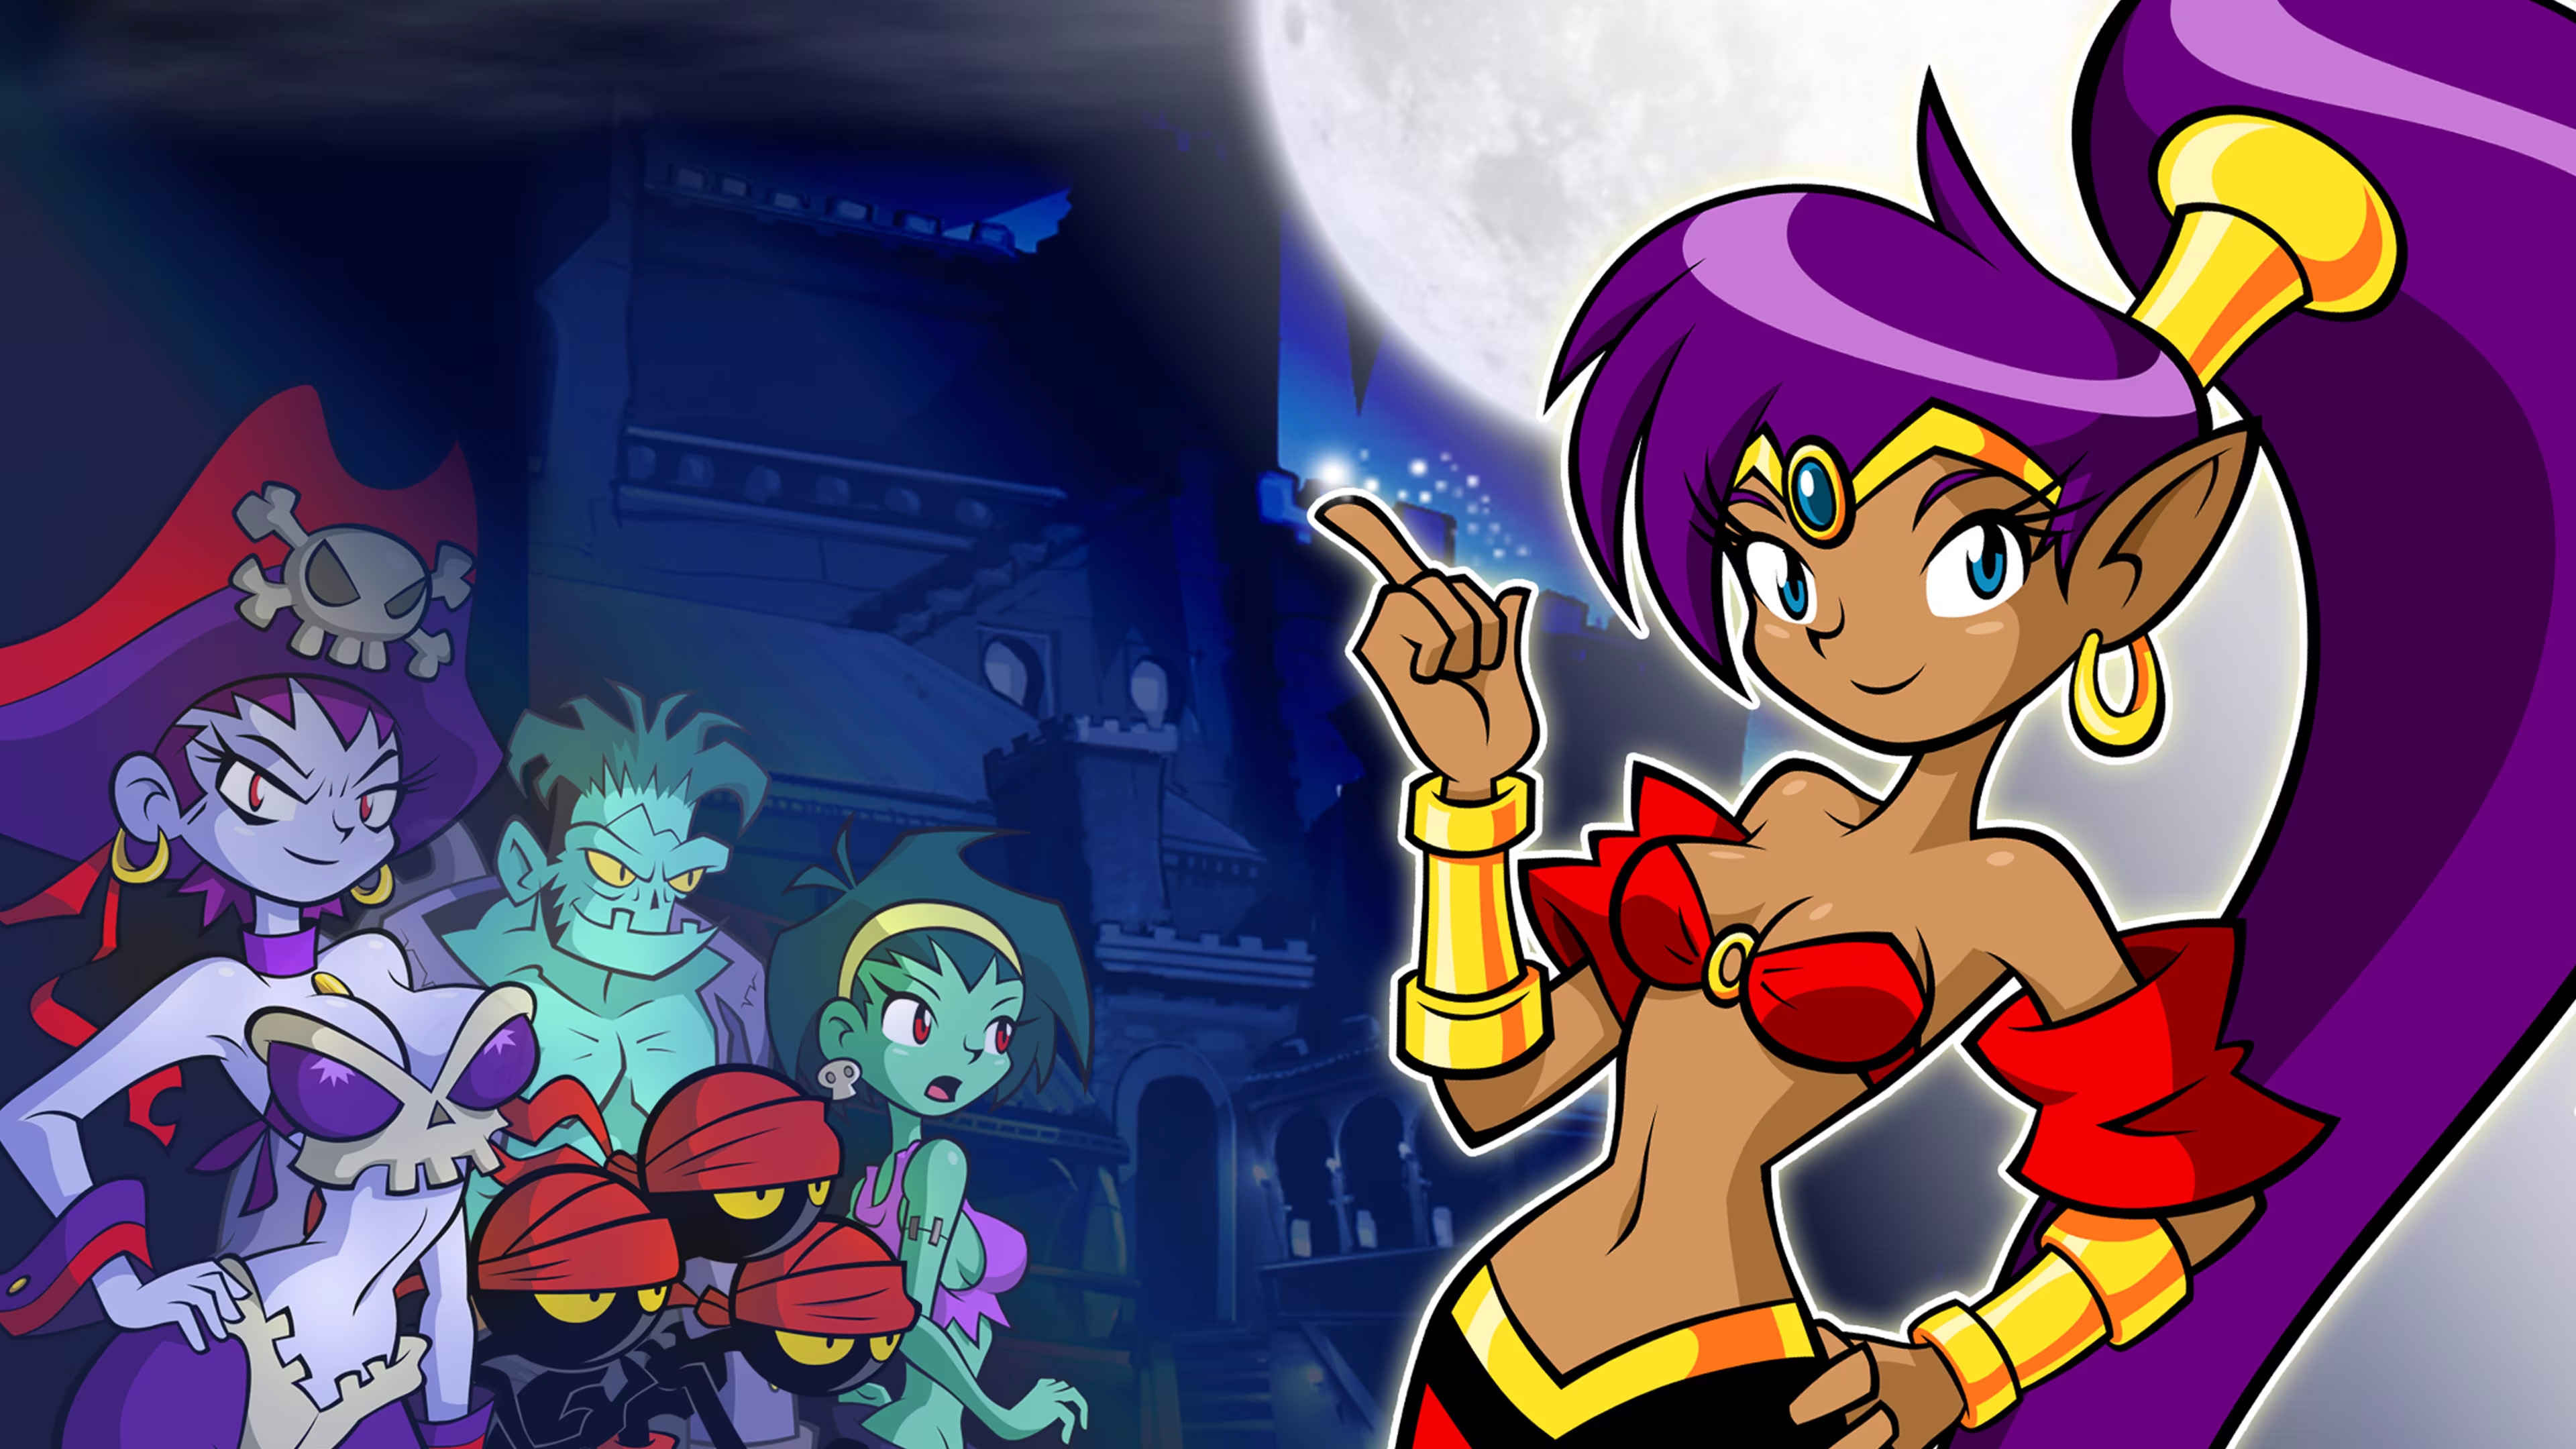 Shantae: Risky's Revenge: Director's Cut